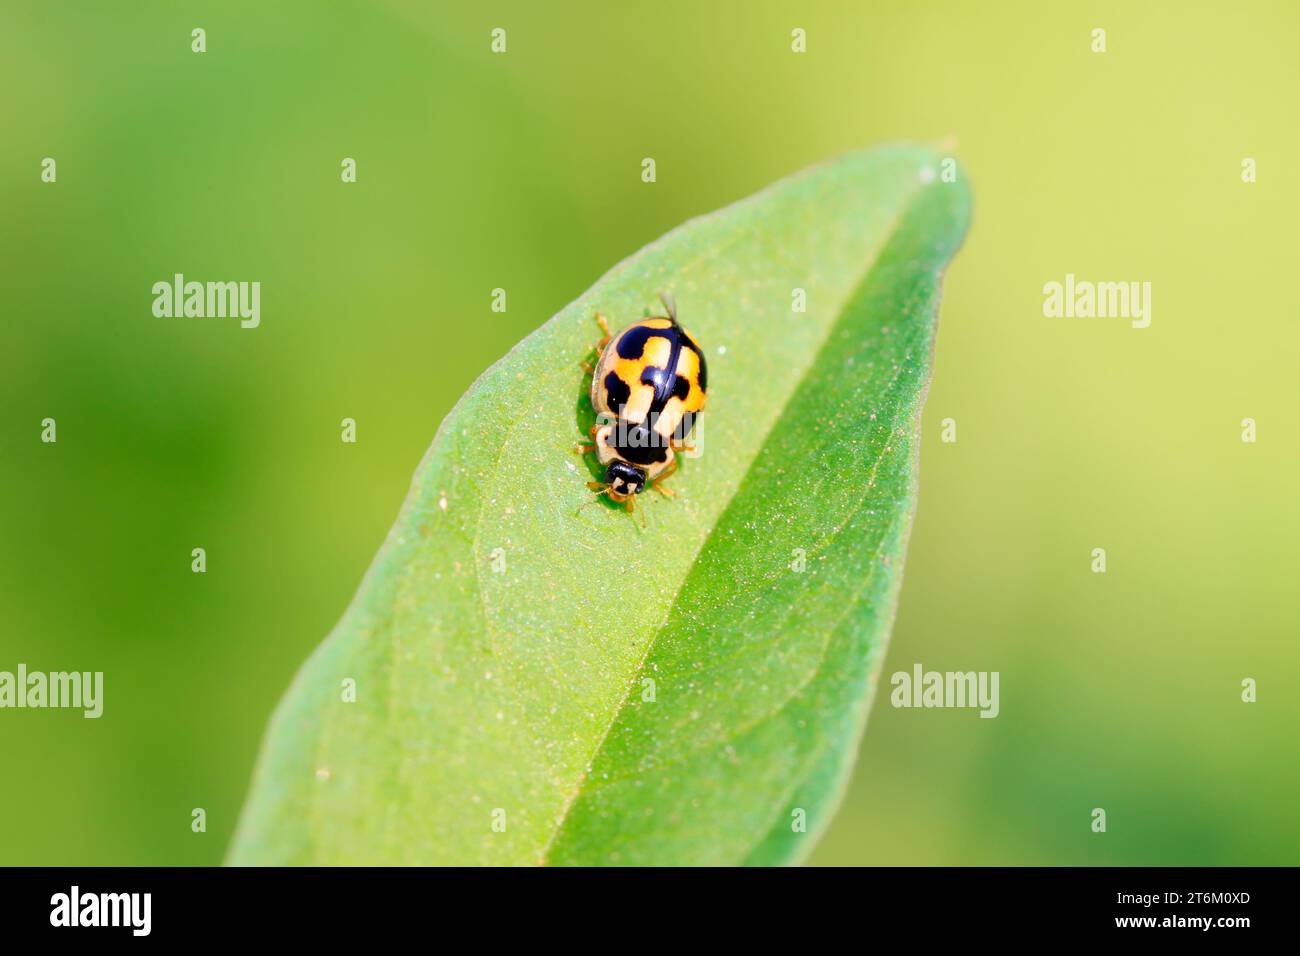 ladybird on green plant Stock Photo